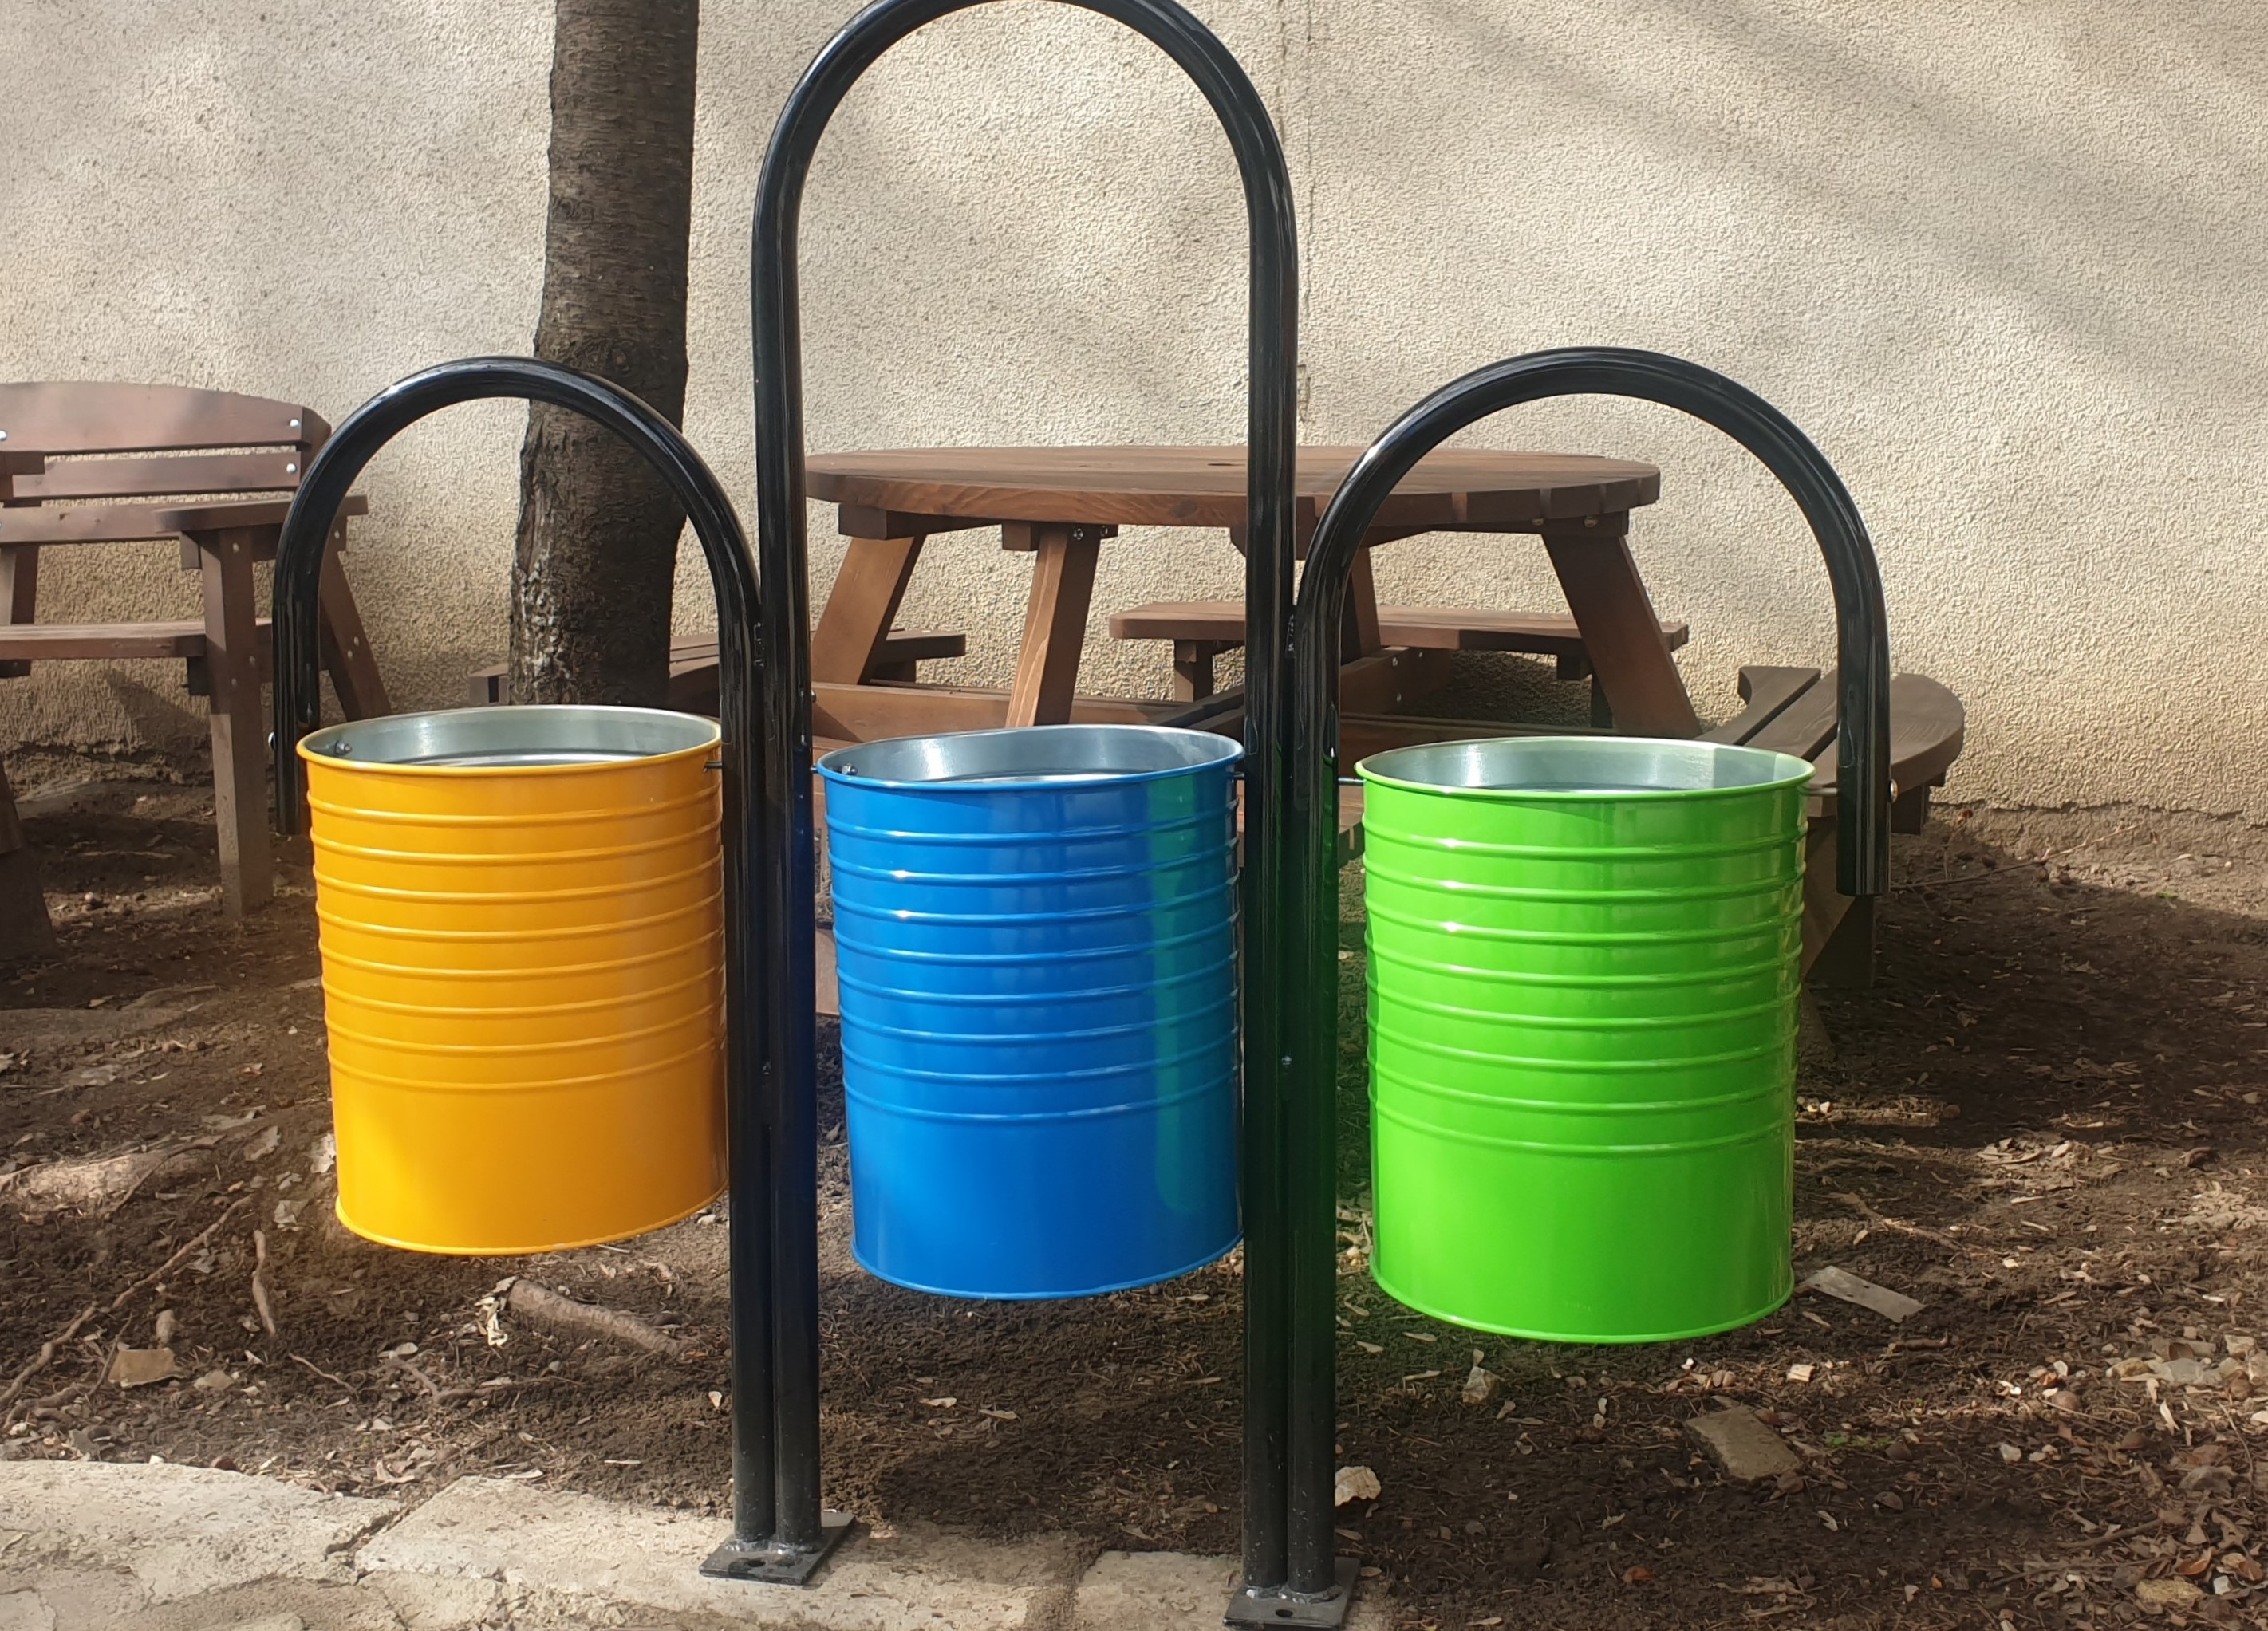 Trash cans for waste separation, П21 model